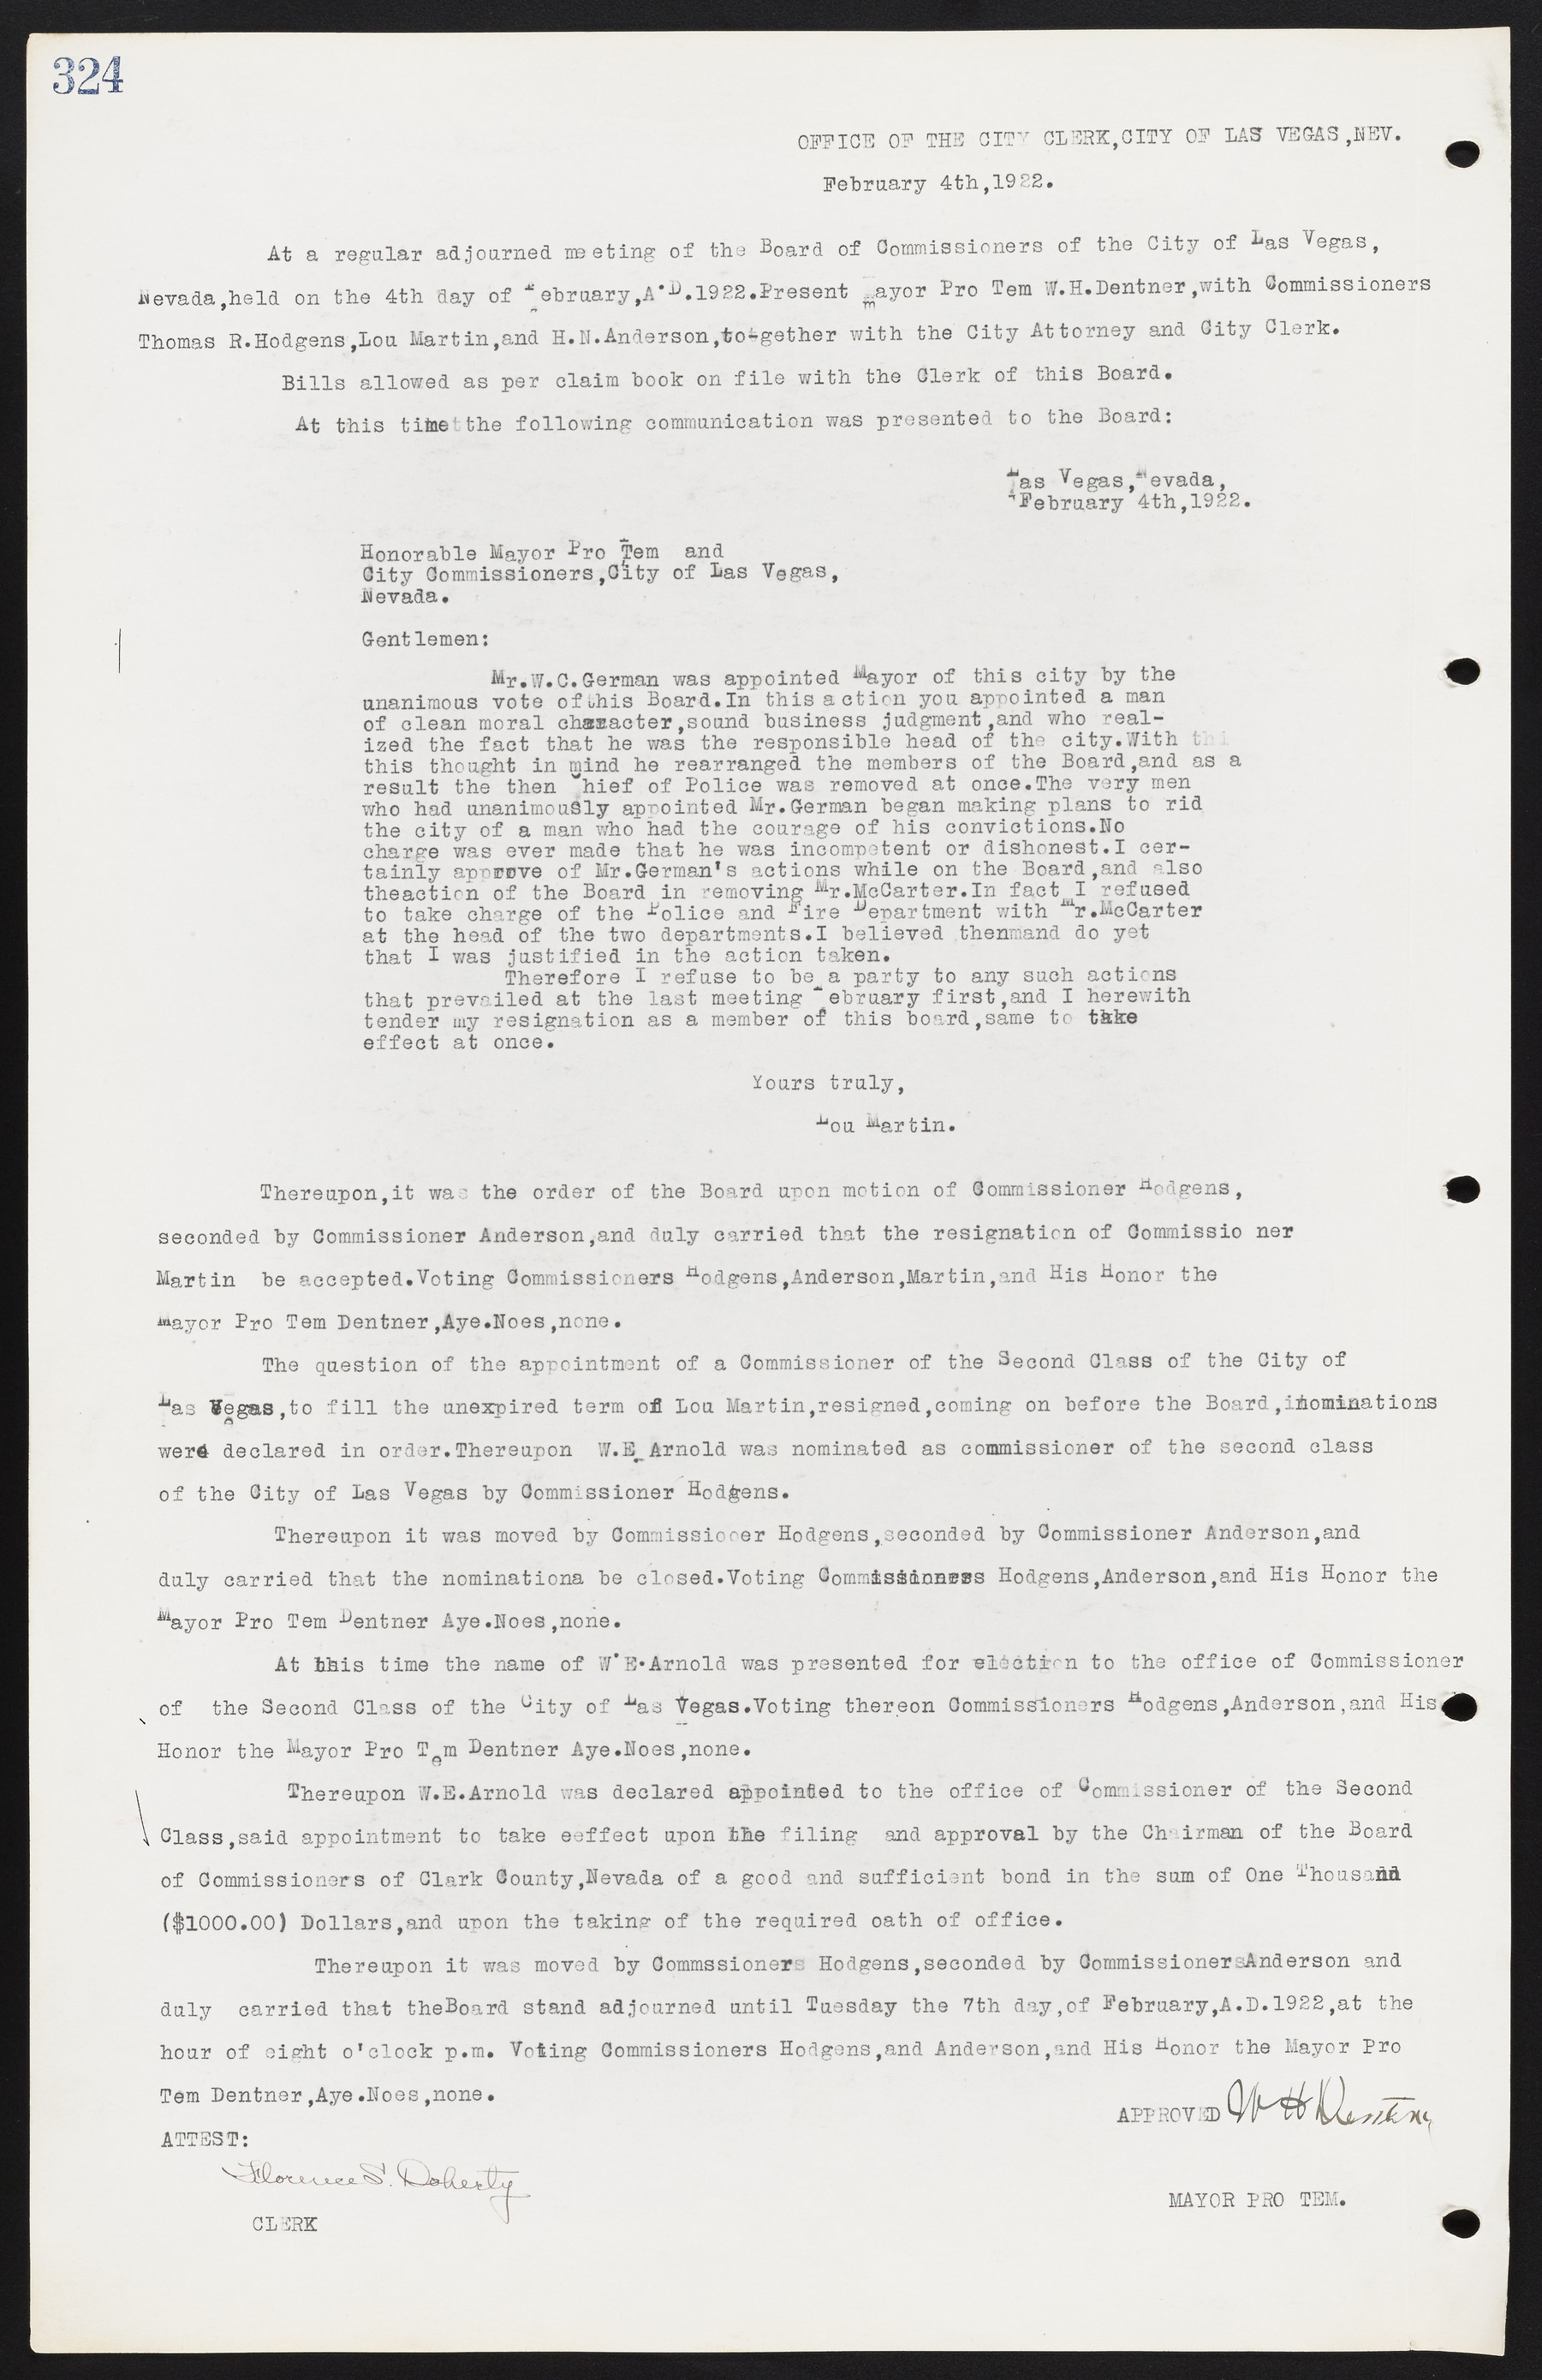 Las Vegas City Commission Minutes, June 22, 1911 to February 7, 1922, lvc000001-340